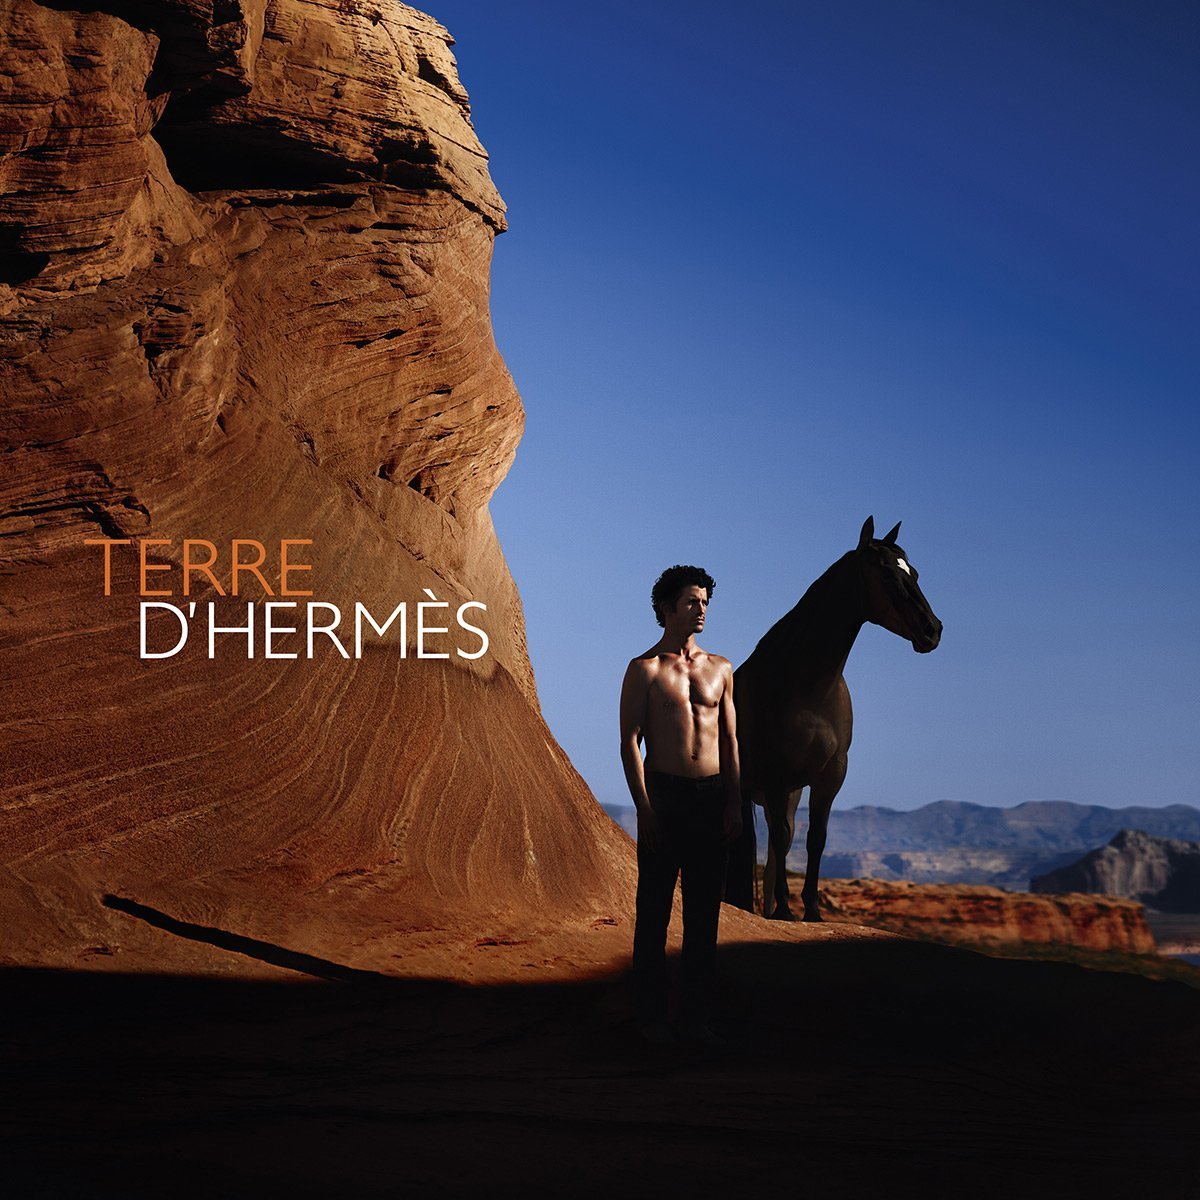 Hermes Terre D'Hermes Parfum Refill Set | My Perfume Shop Australia